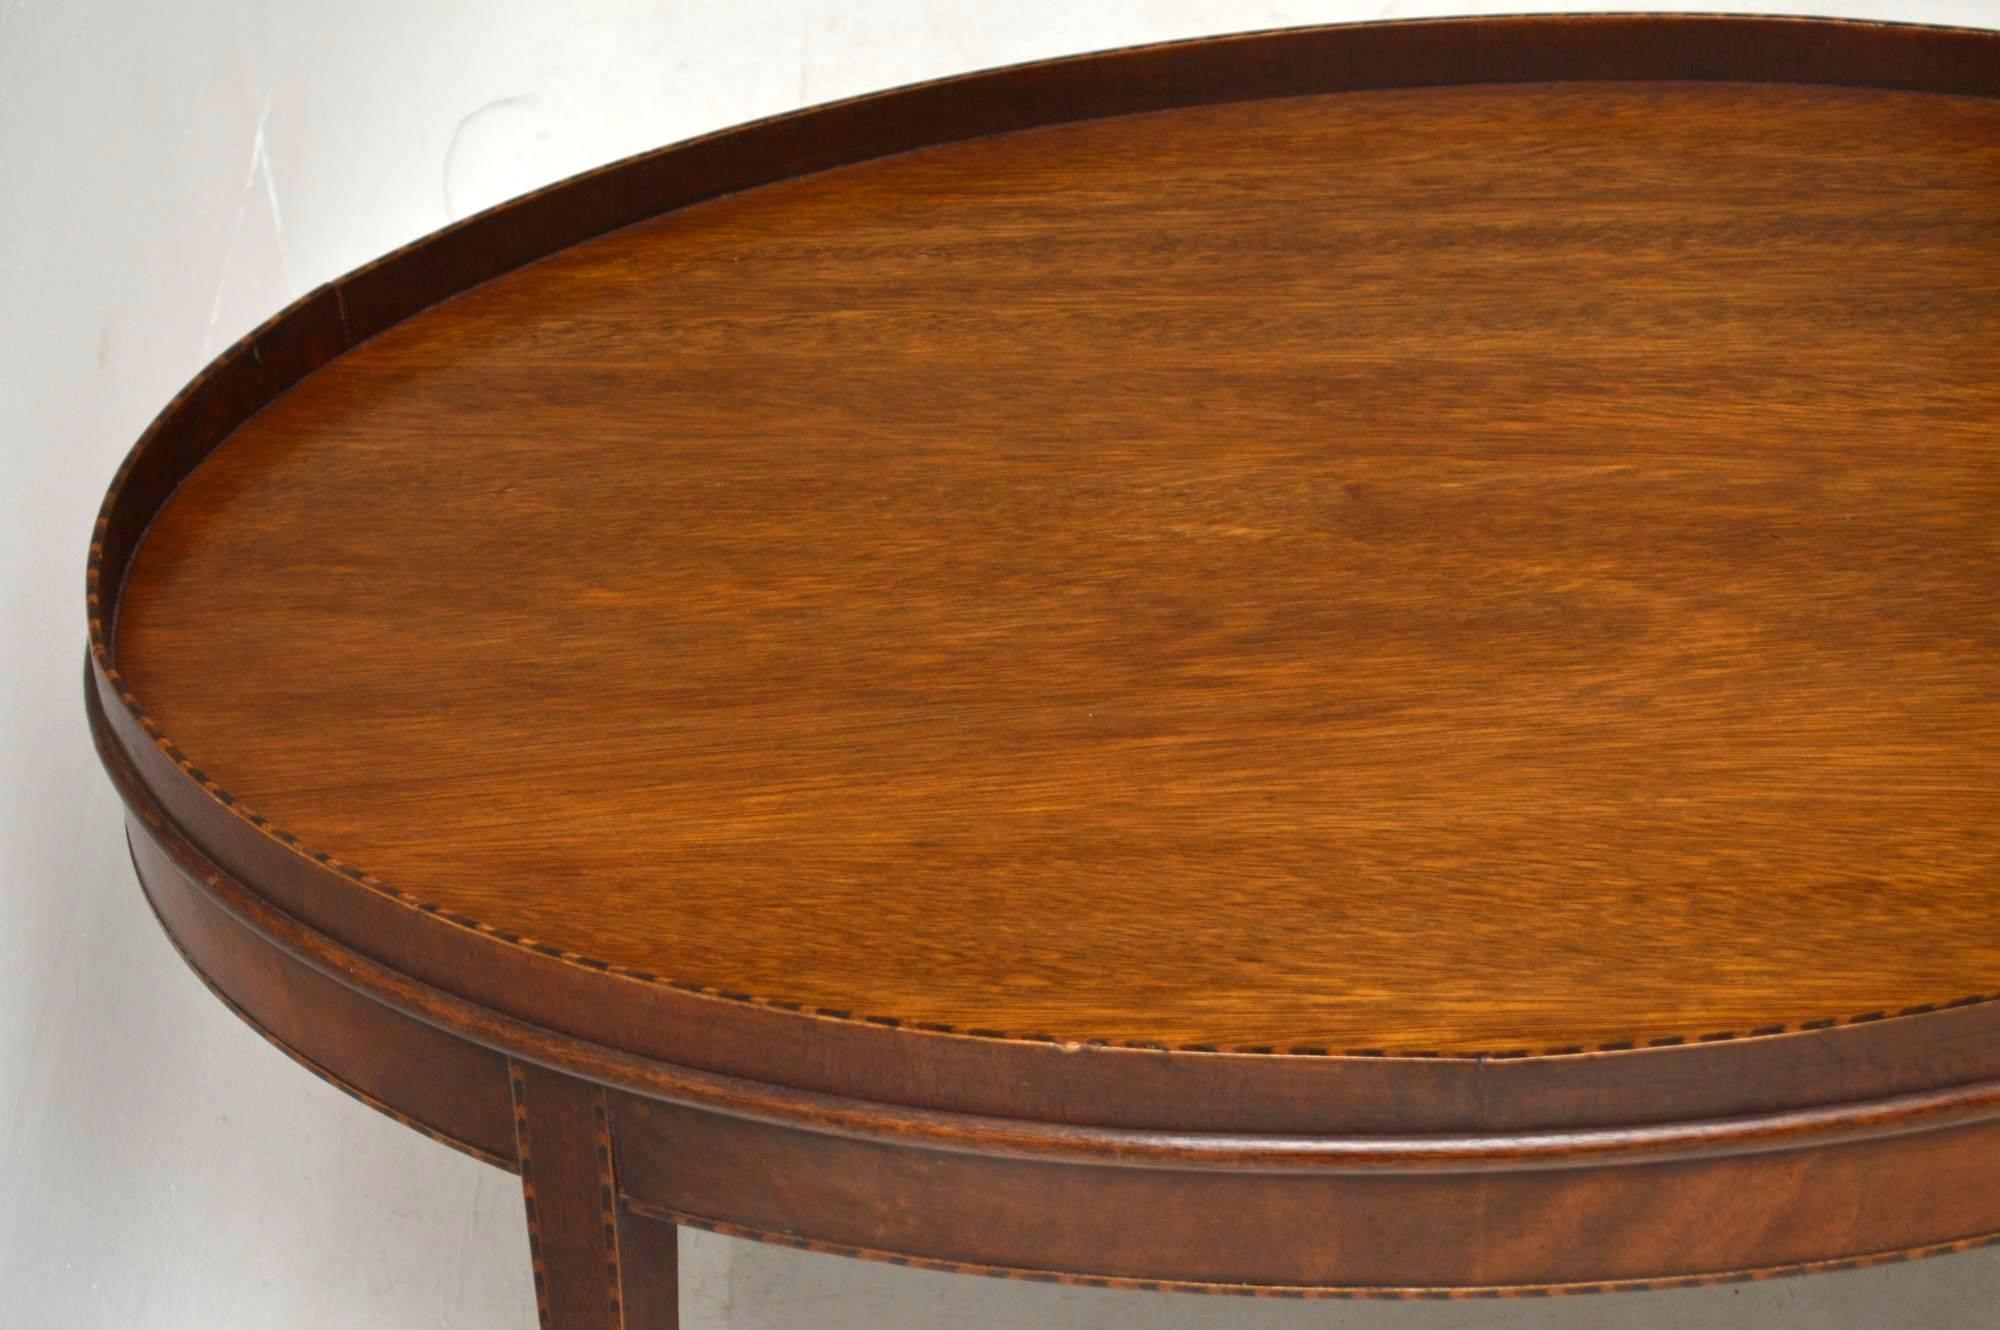 English Antique Inlaid Mahogany Coffee Table